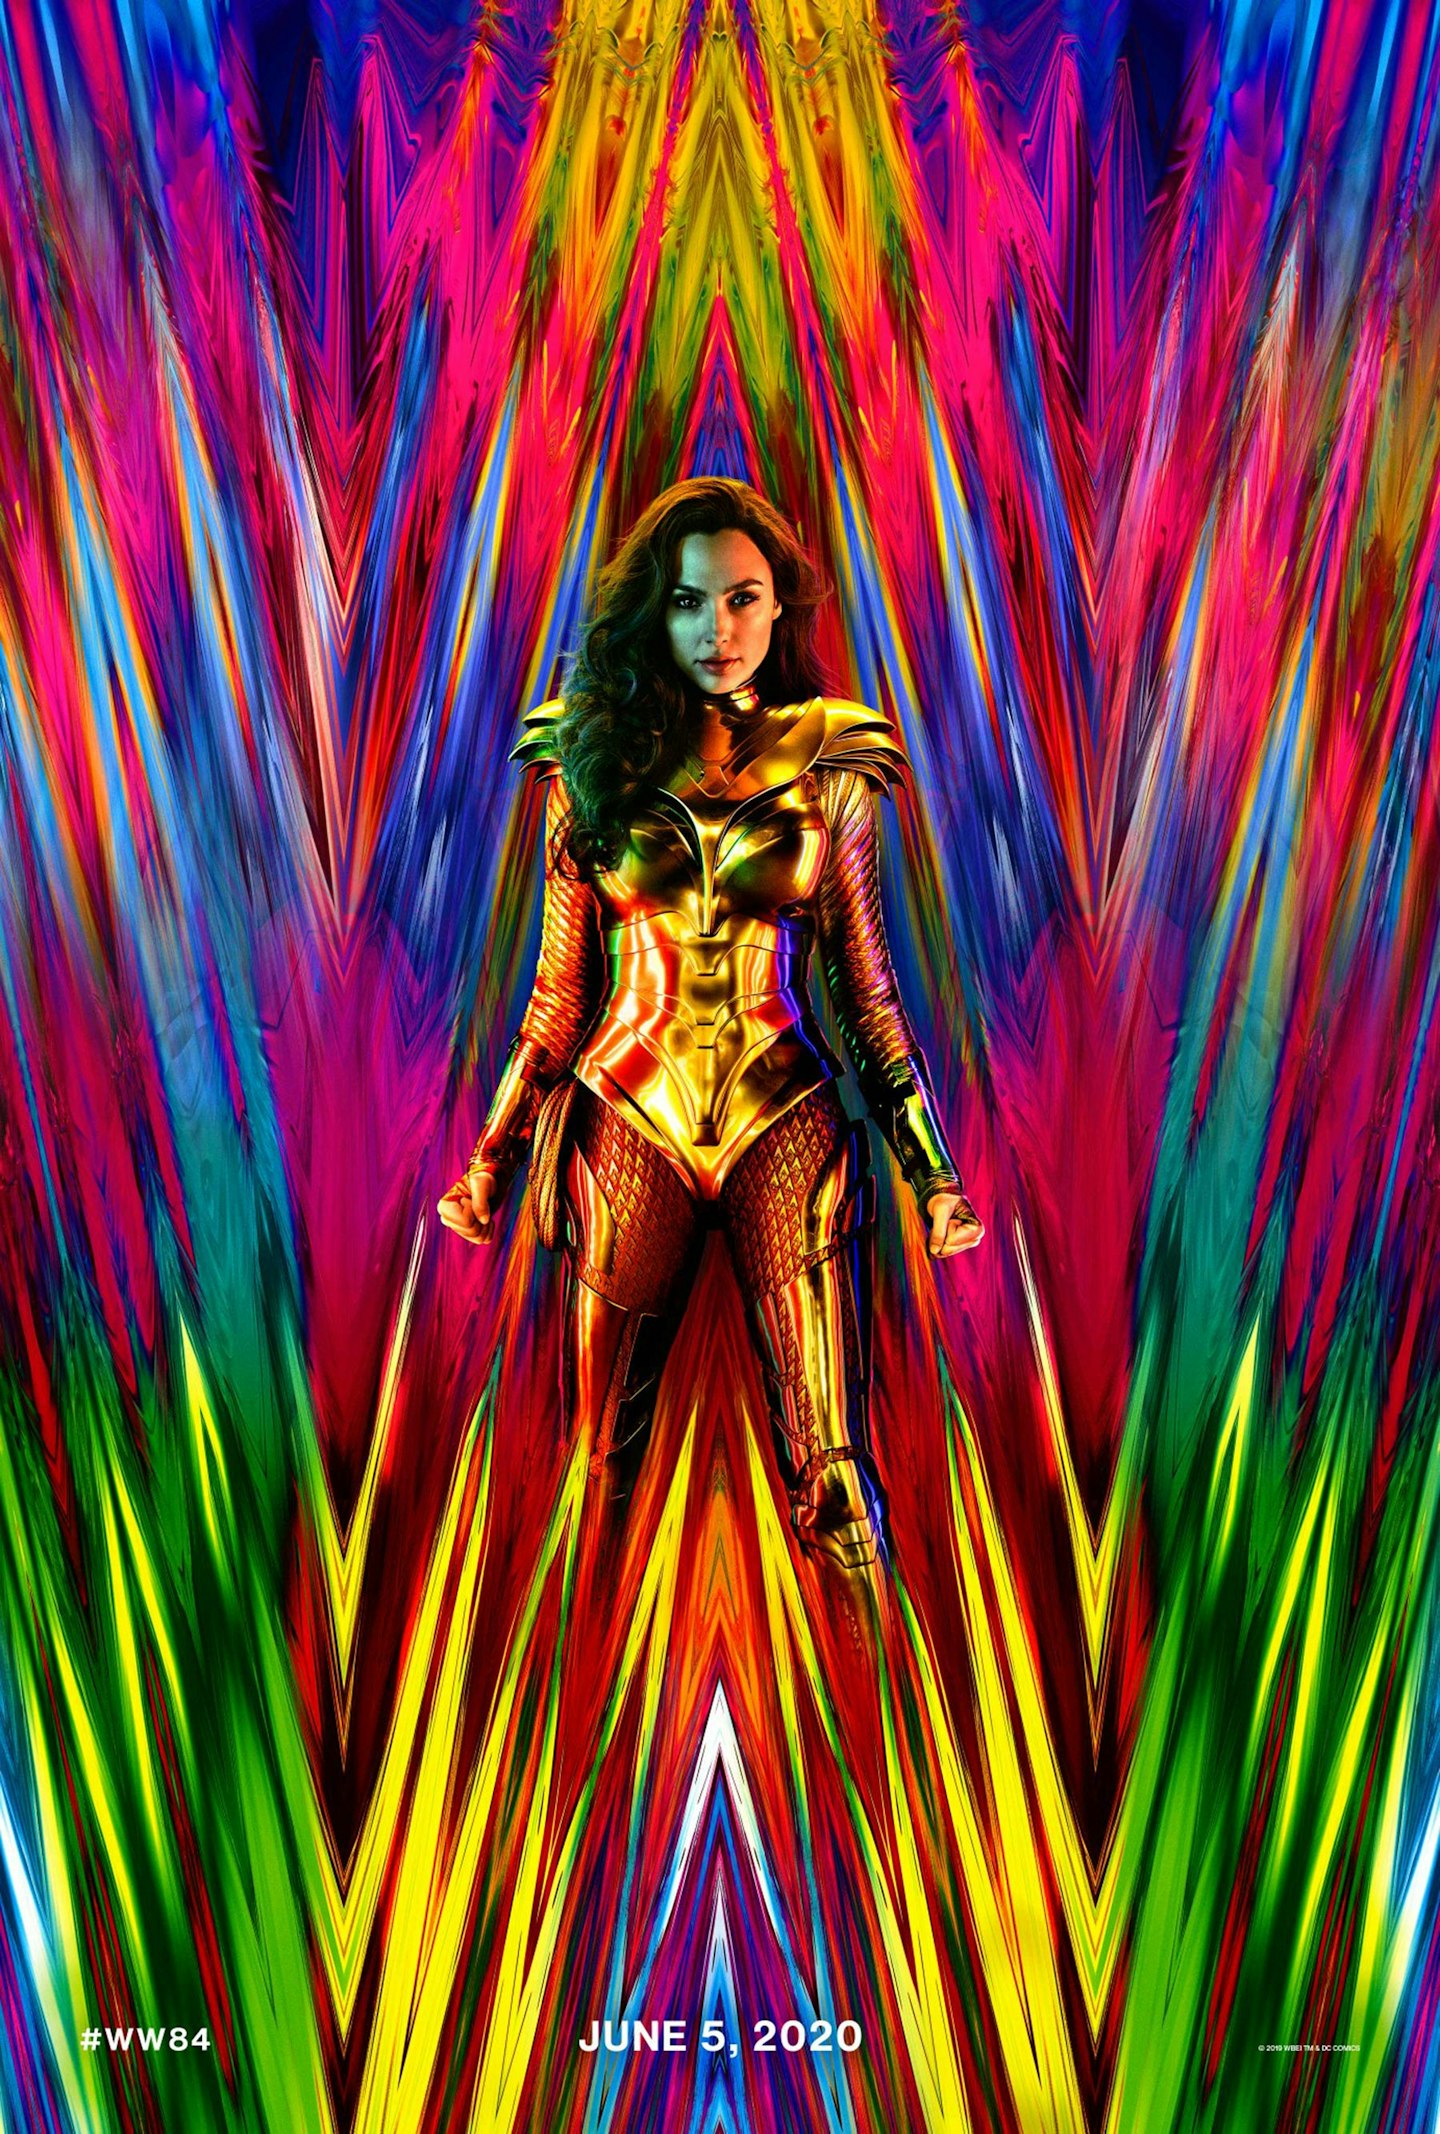 Wonder Woman 1984 - First Poster